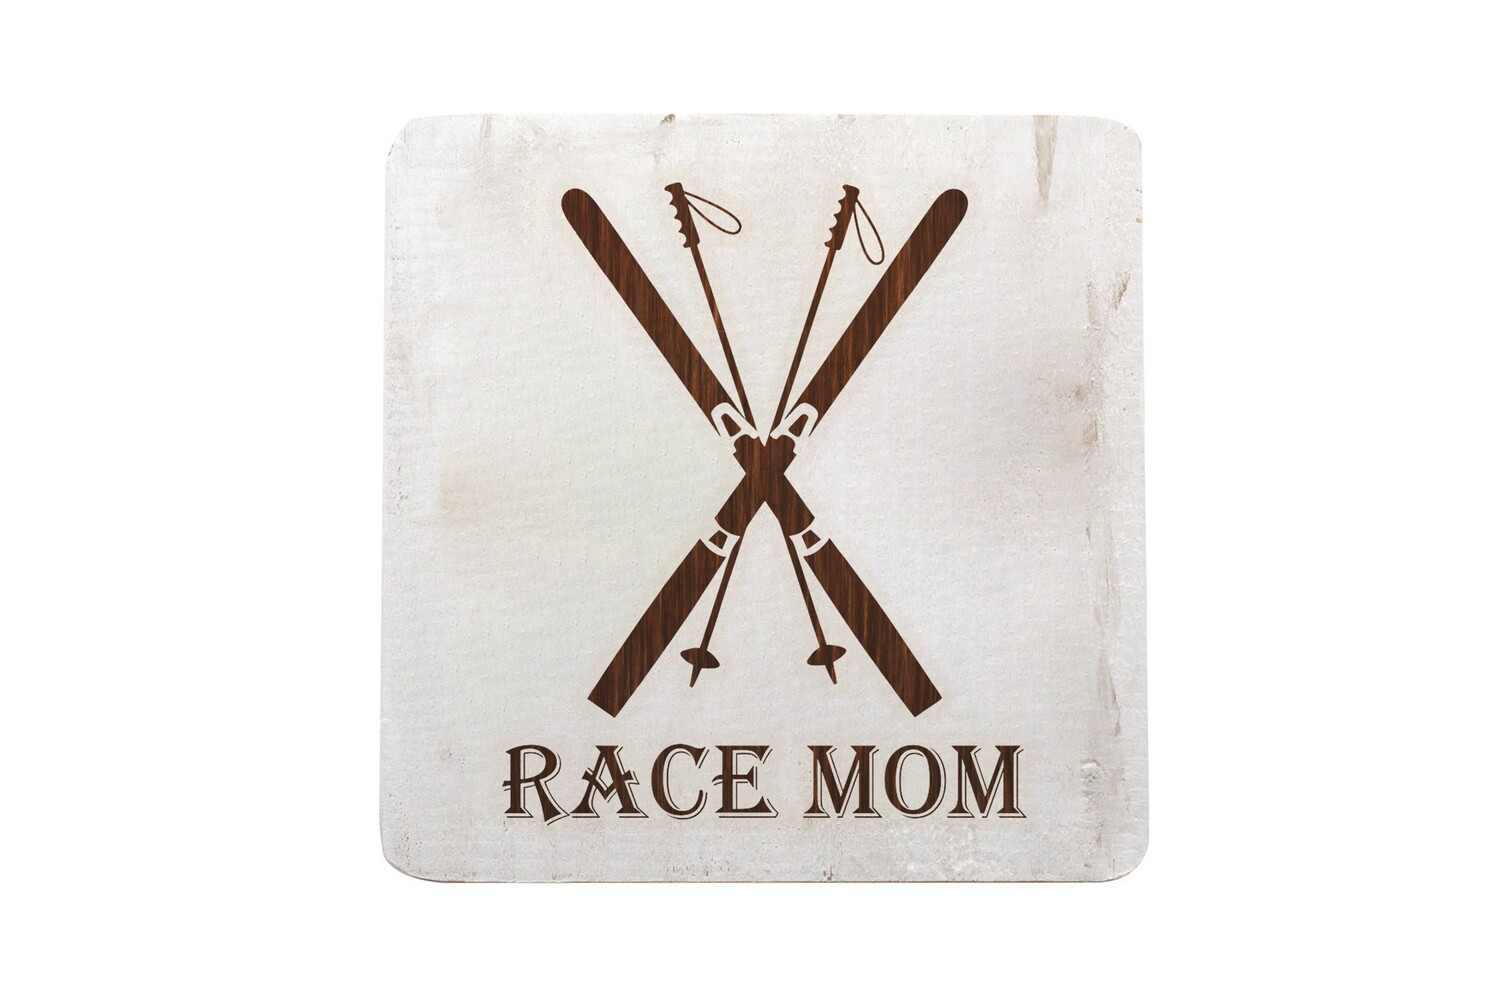 Race Mom Hand-Painted Wood Coaster Set